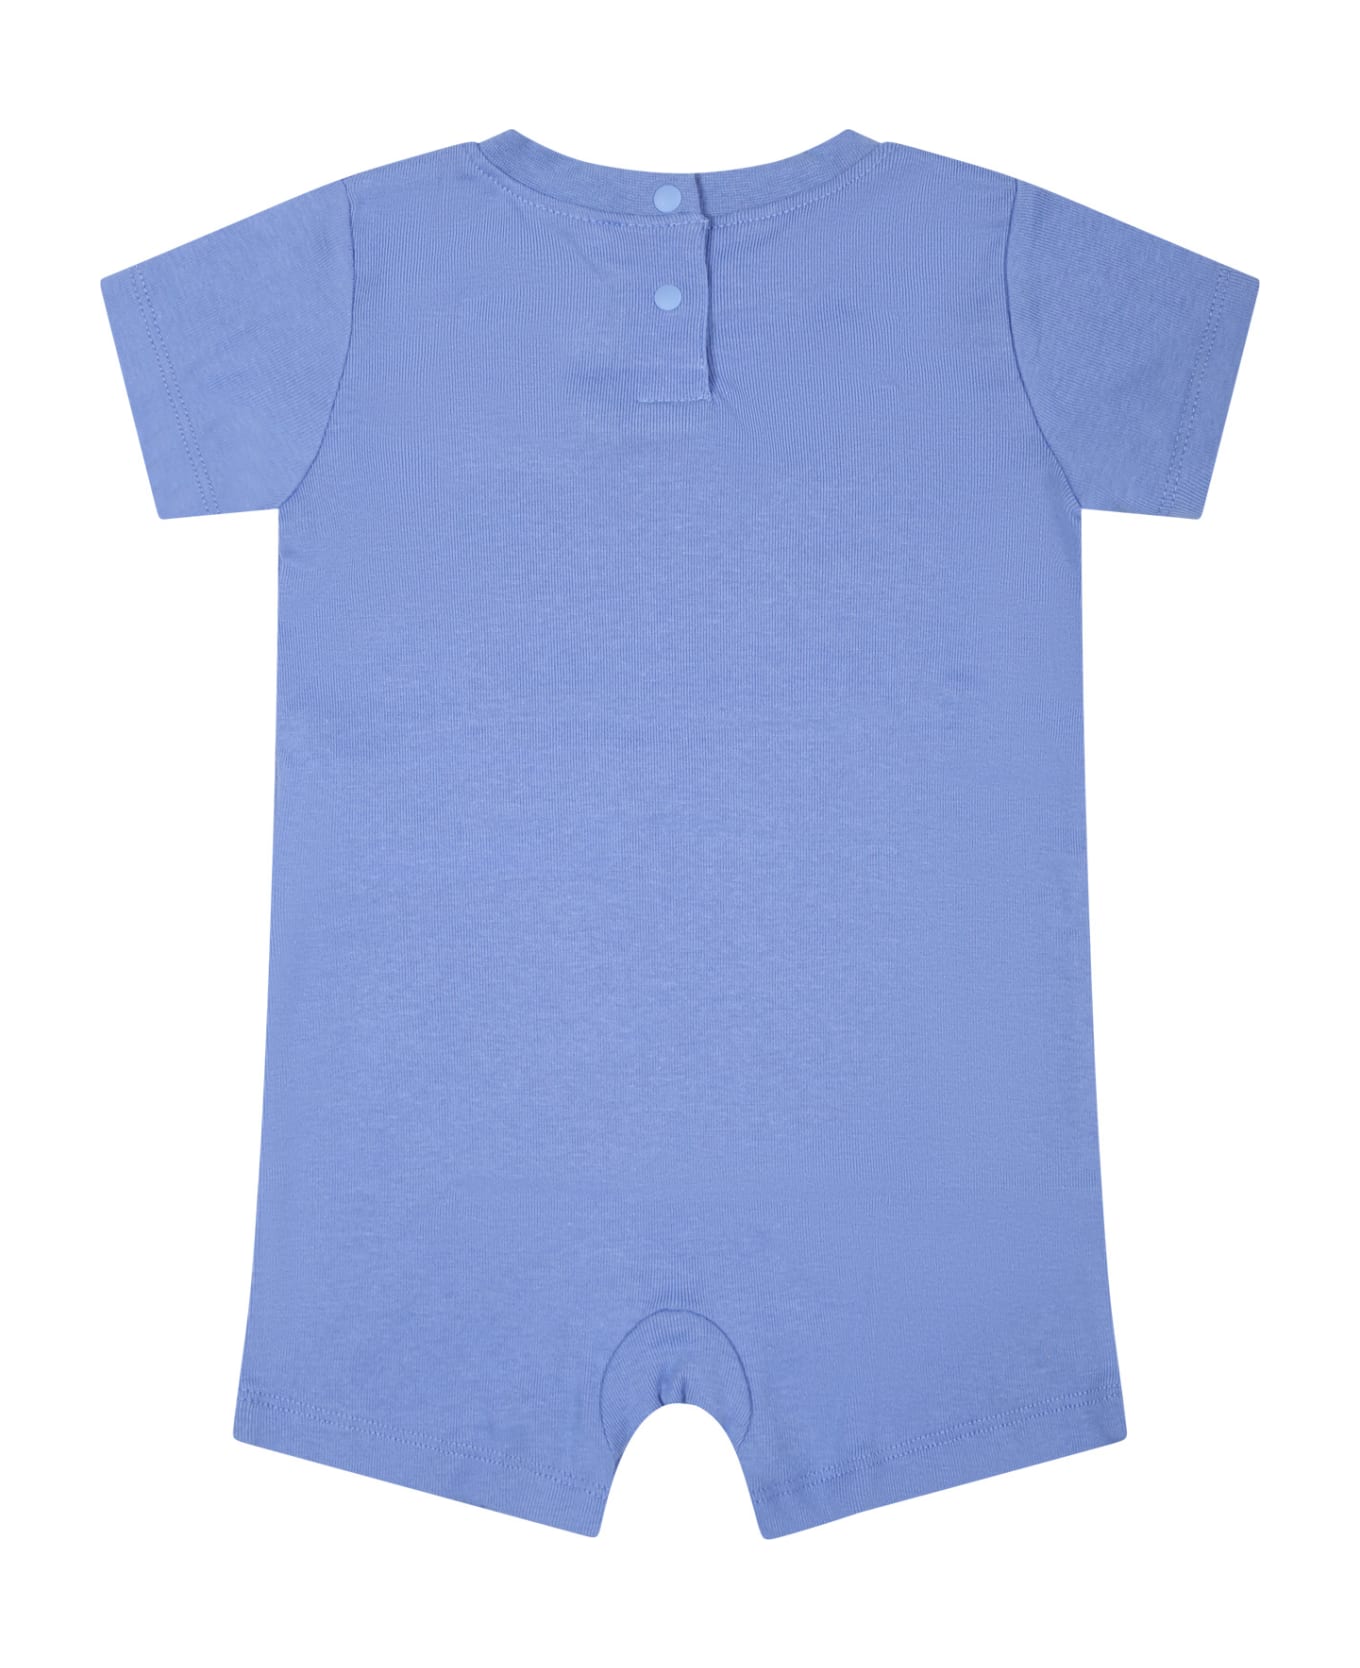 Nike Light Blue Romper Set For Baby Boy With Logo - Light Blue